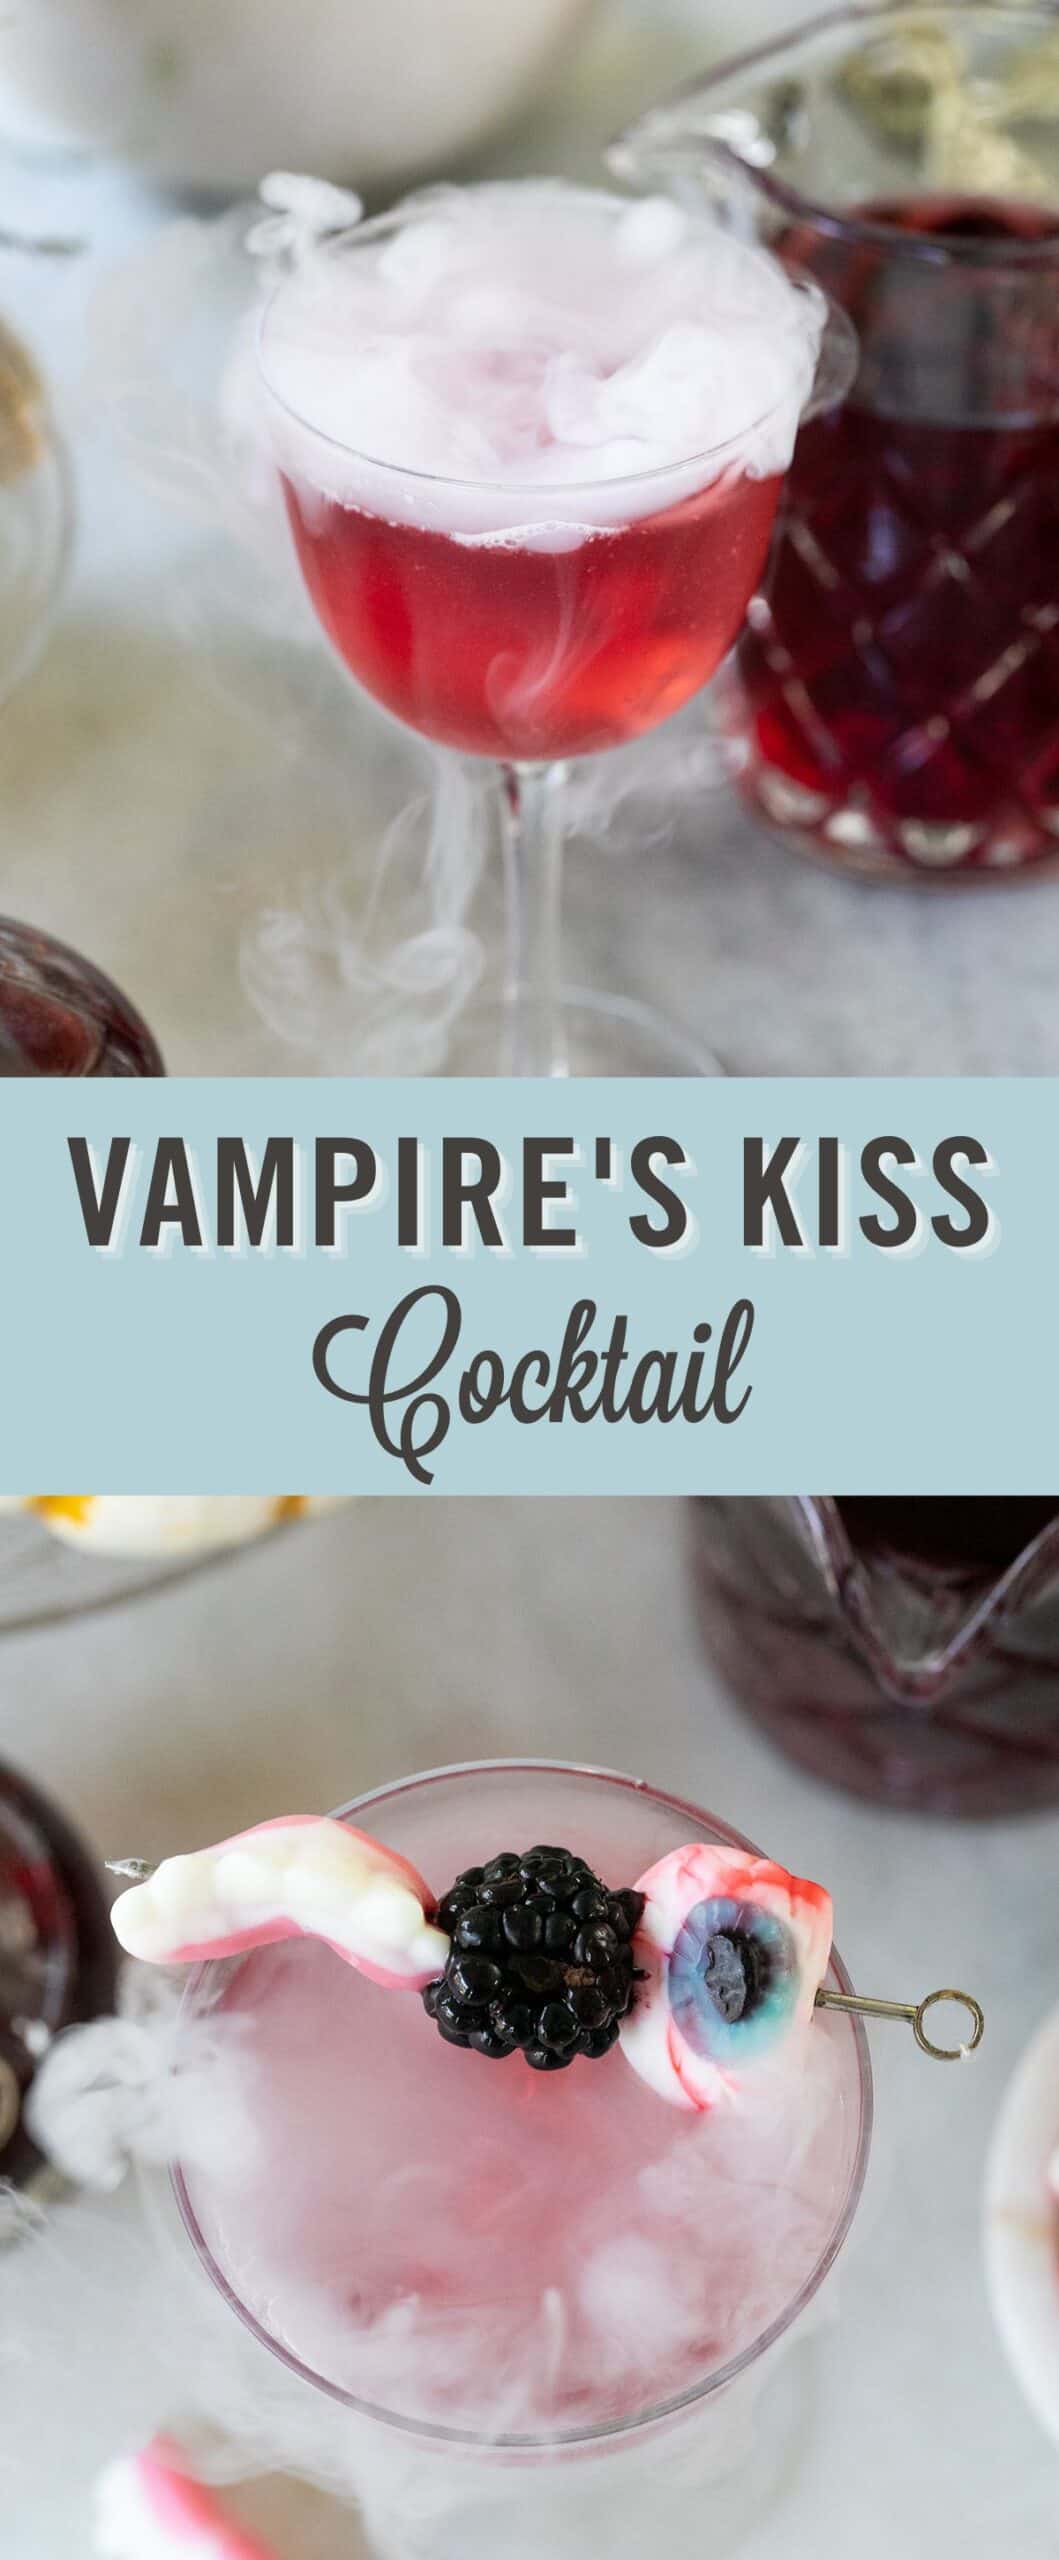 Vampire's Kiss Cocktail.